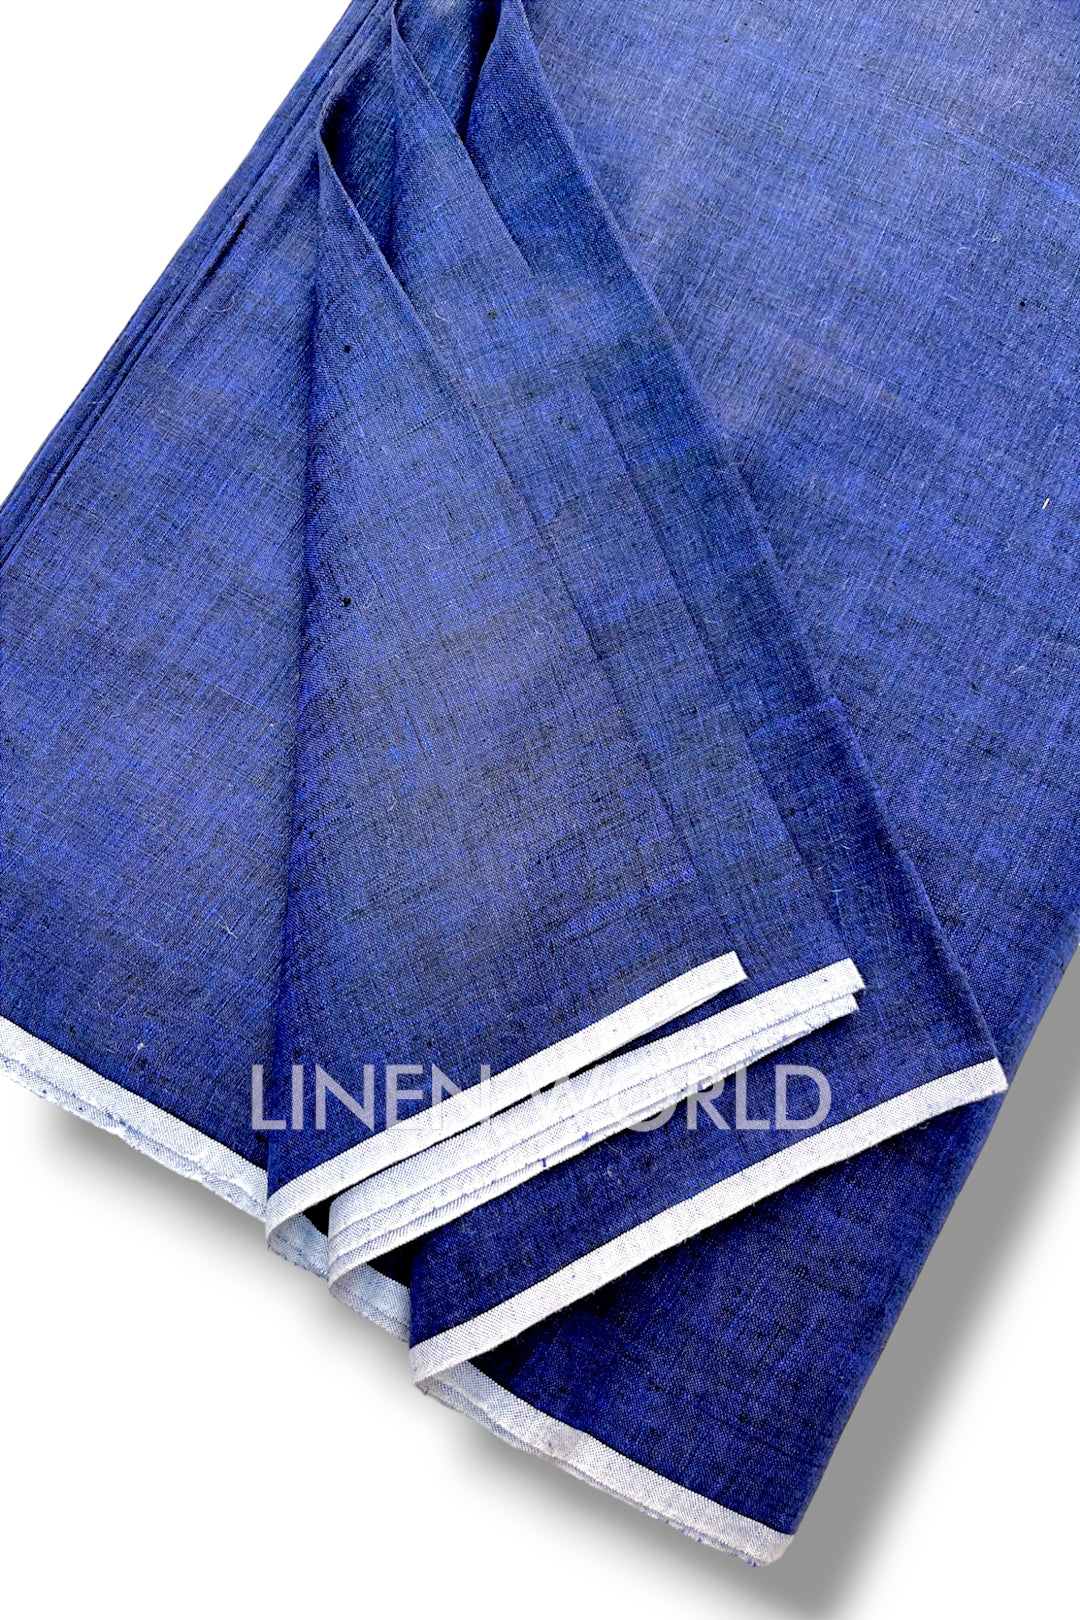 navy blue pure linen 60 lea shirting fabric - linenworldonline.in